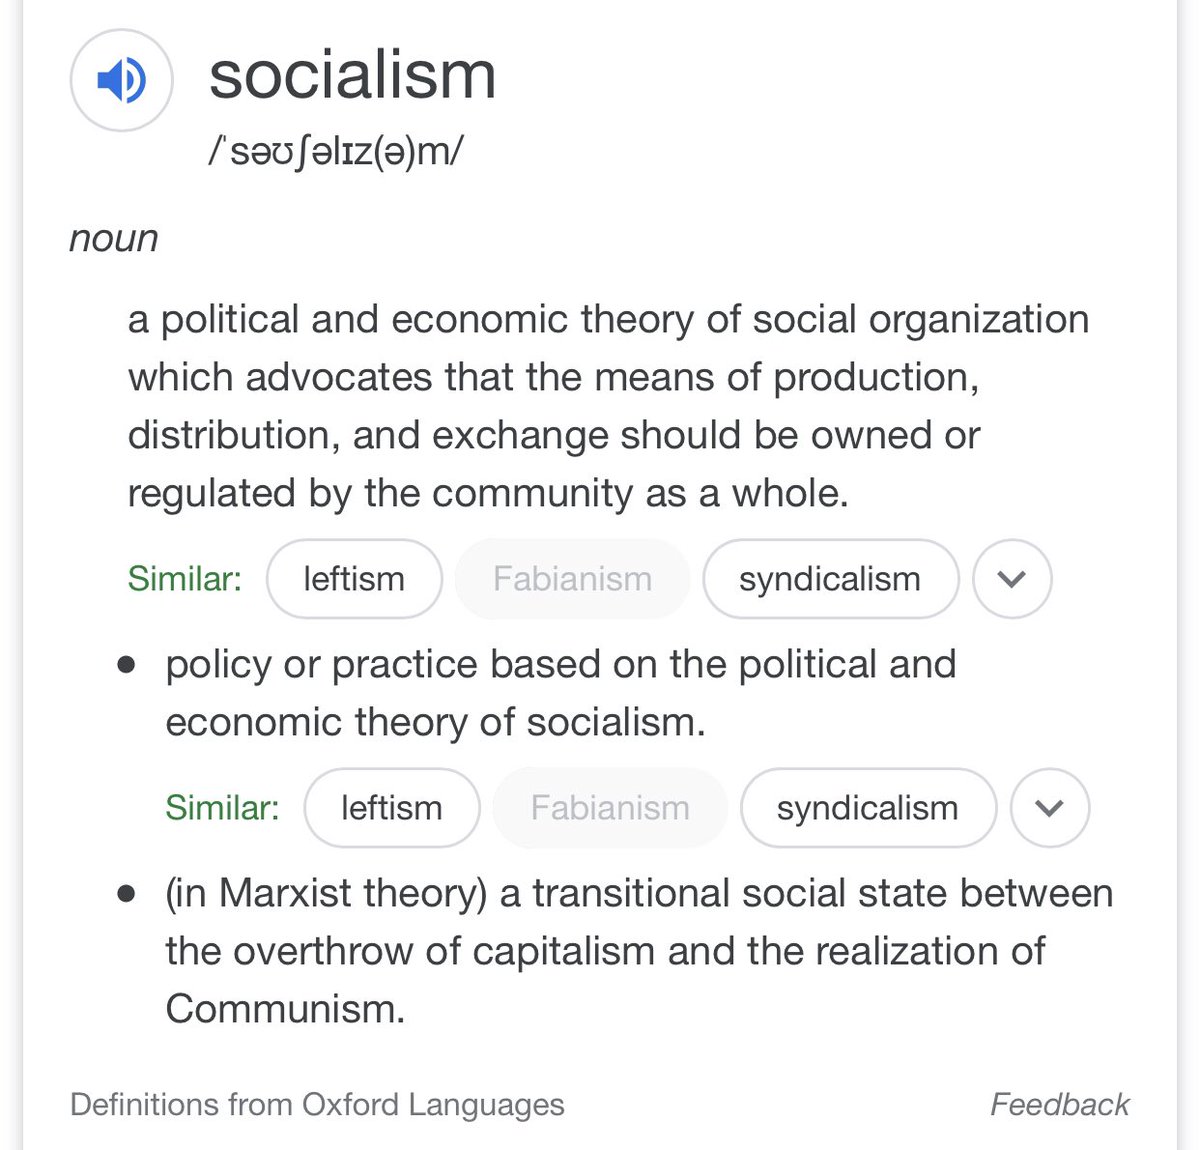 Who remembers this? https://www.theguardian.com/commentisfree/2020/jan/15/labour-socialism-values-election-economic-model